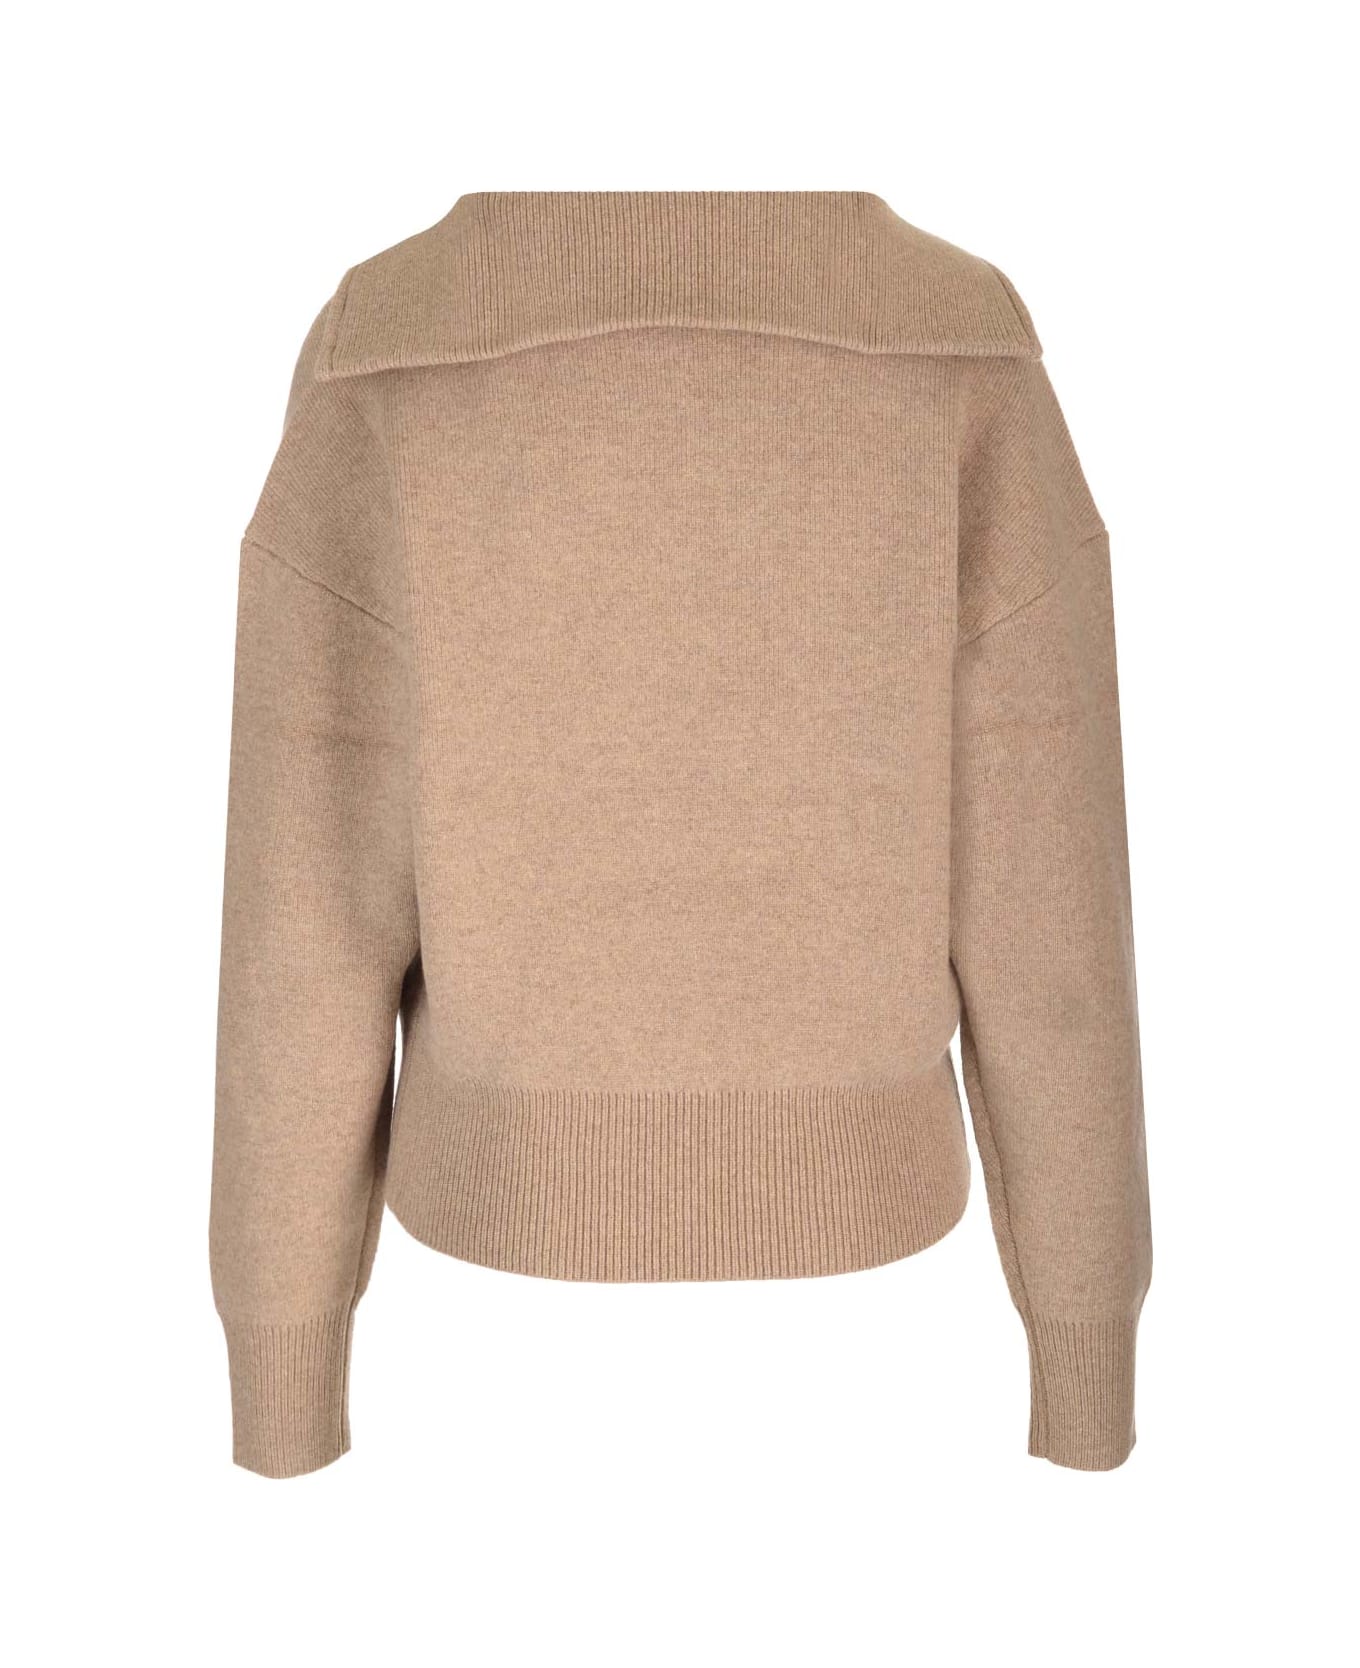 Marant Étoile Half Zip Sweater - Beige ニットウェア